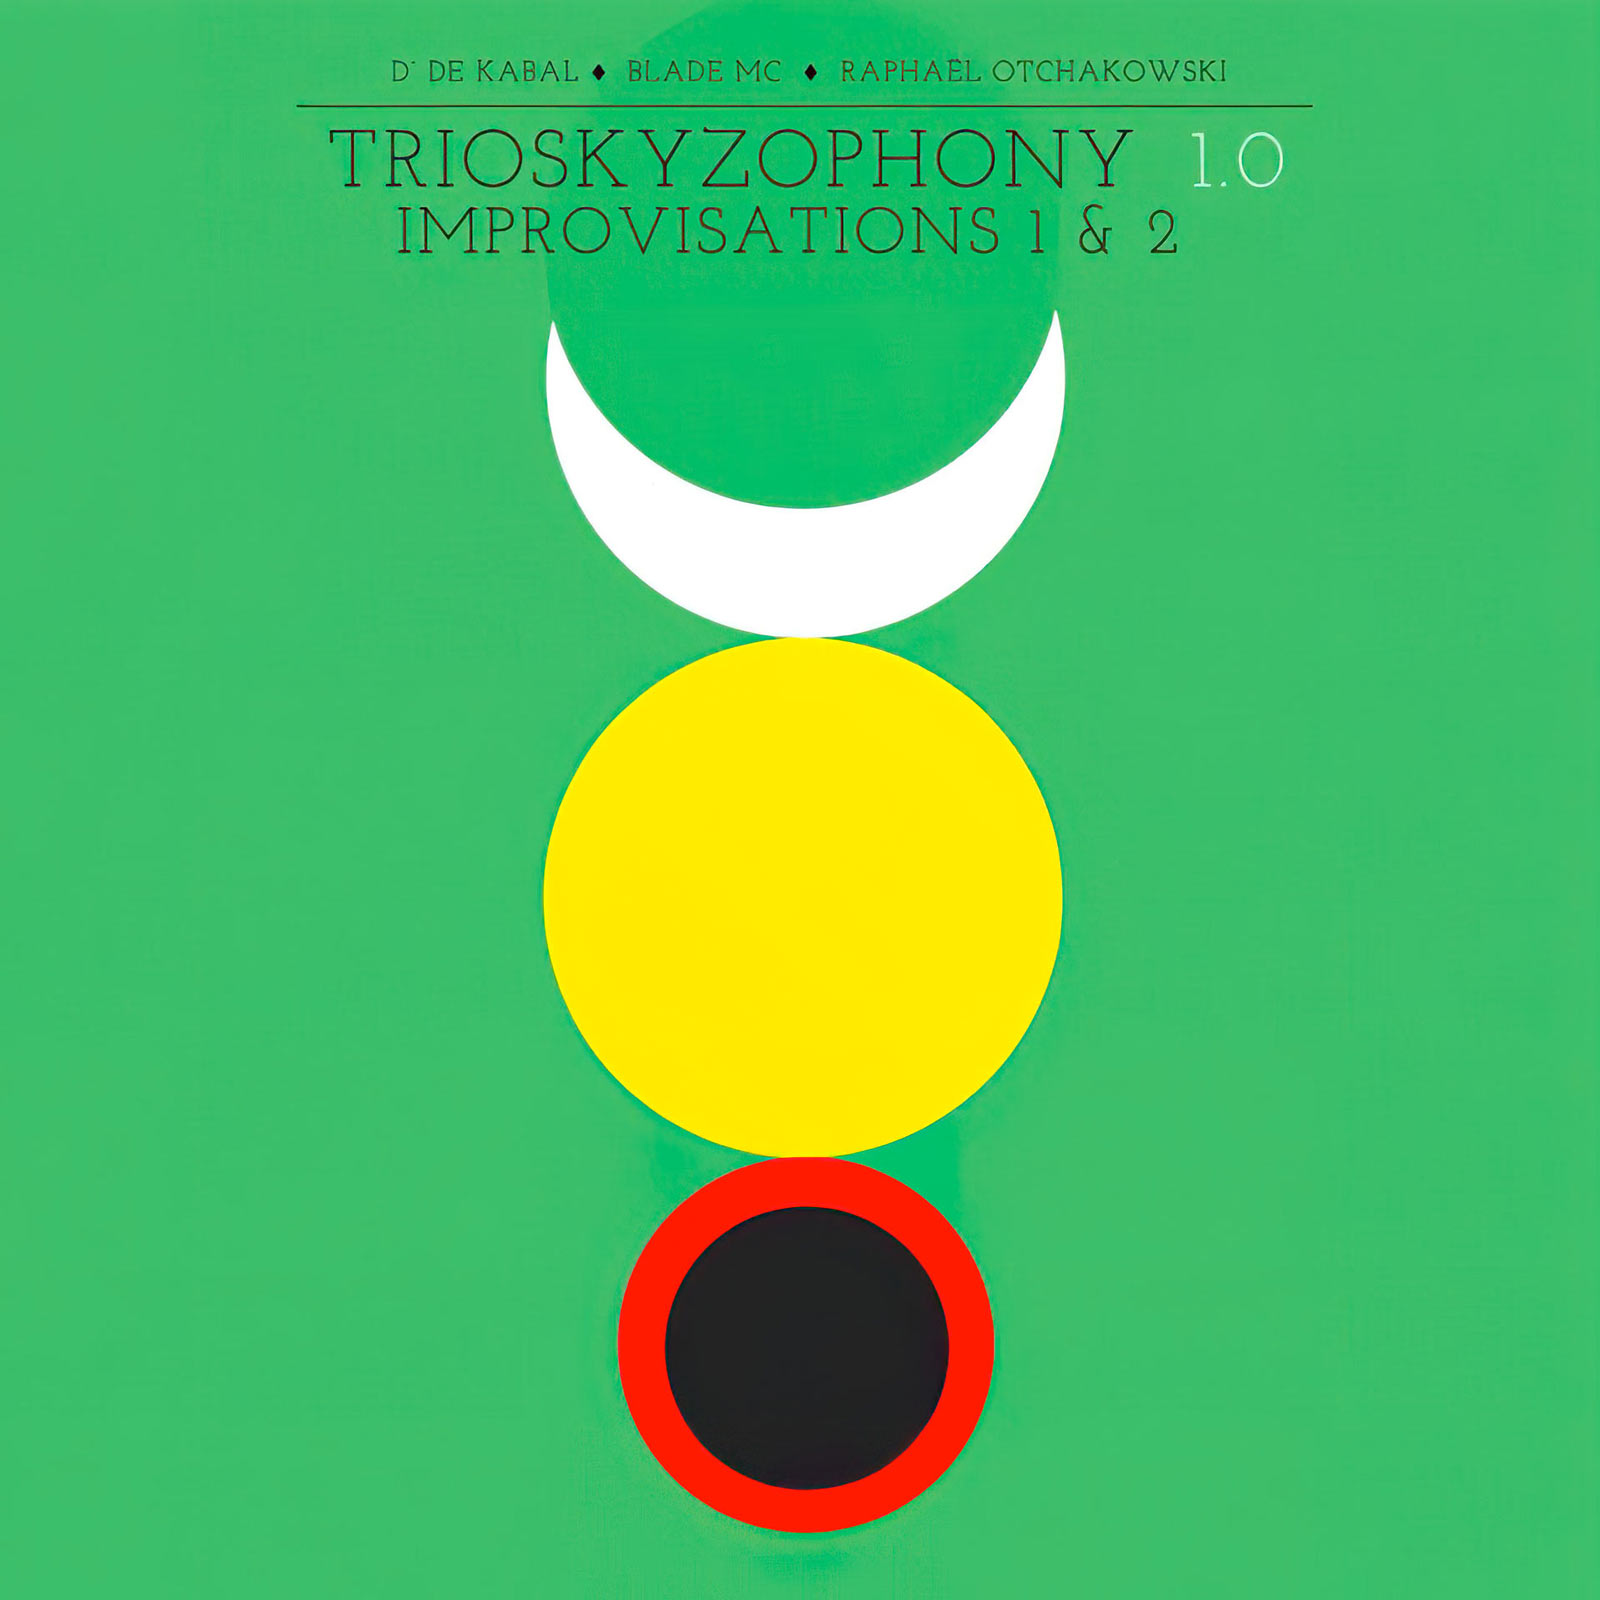 Trioskyzophony, Improvisations 1 & 2, Digital Album Cover